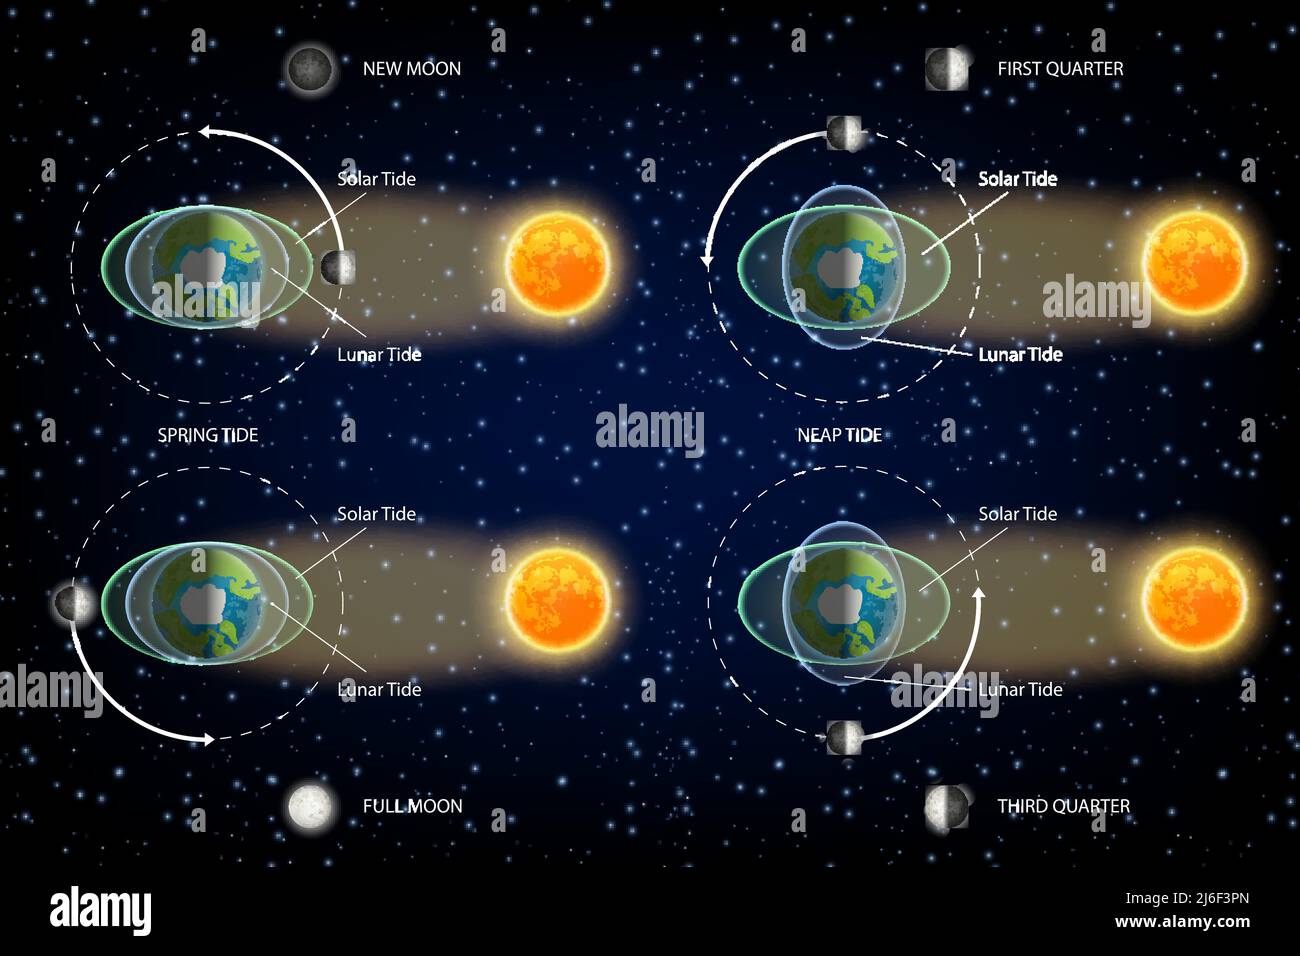 Lunar and Solar tides diagram vector illustration Stock Vector